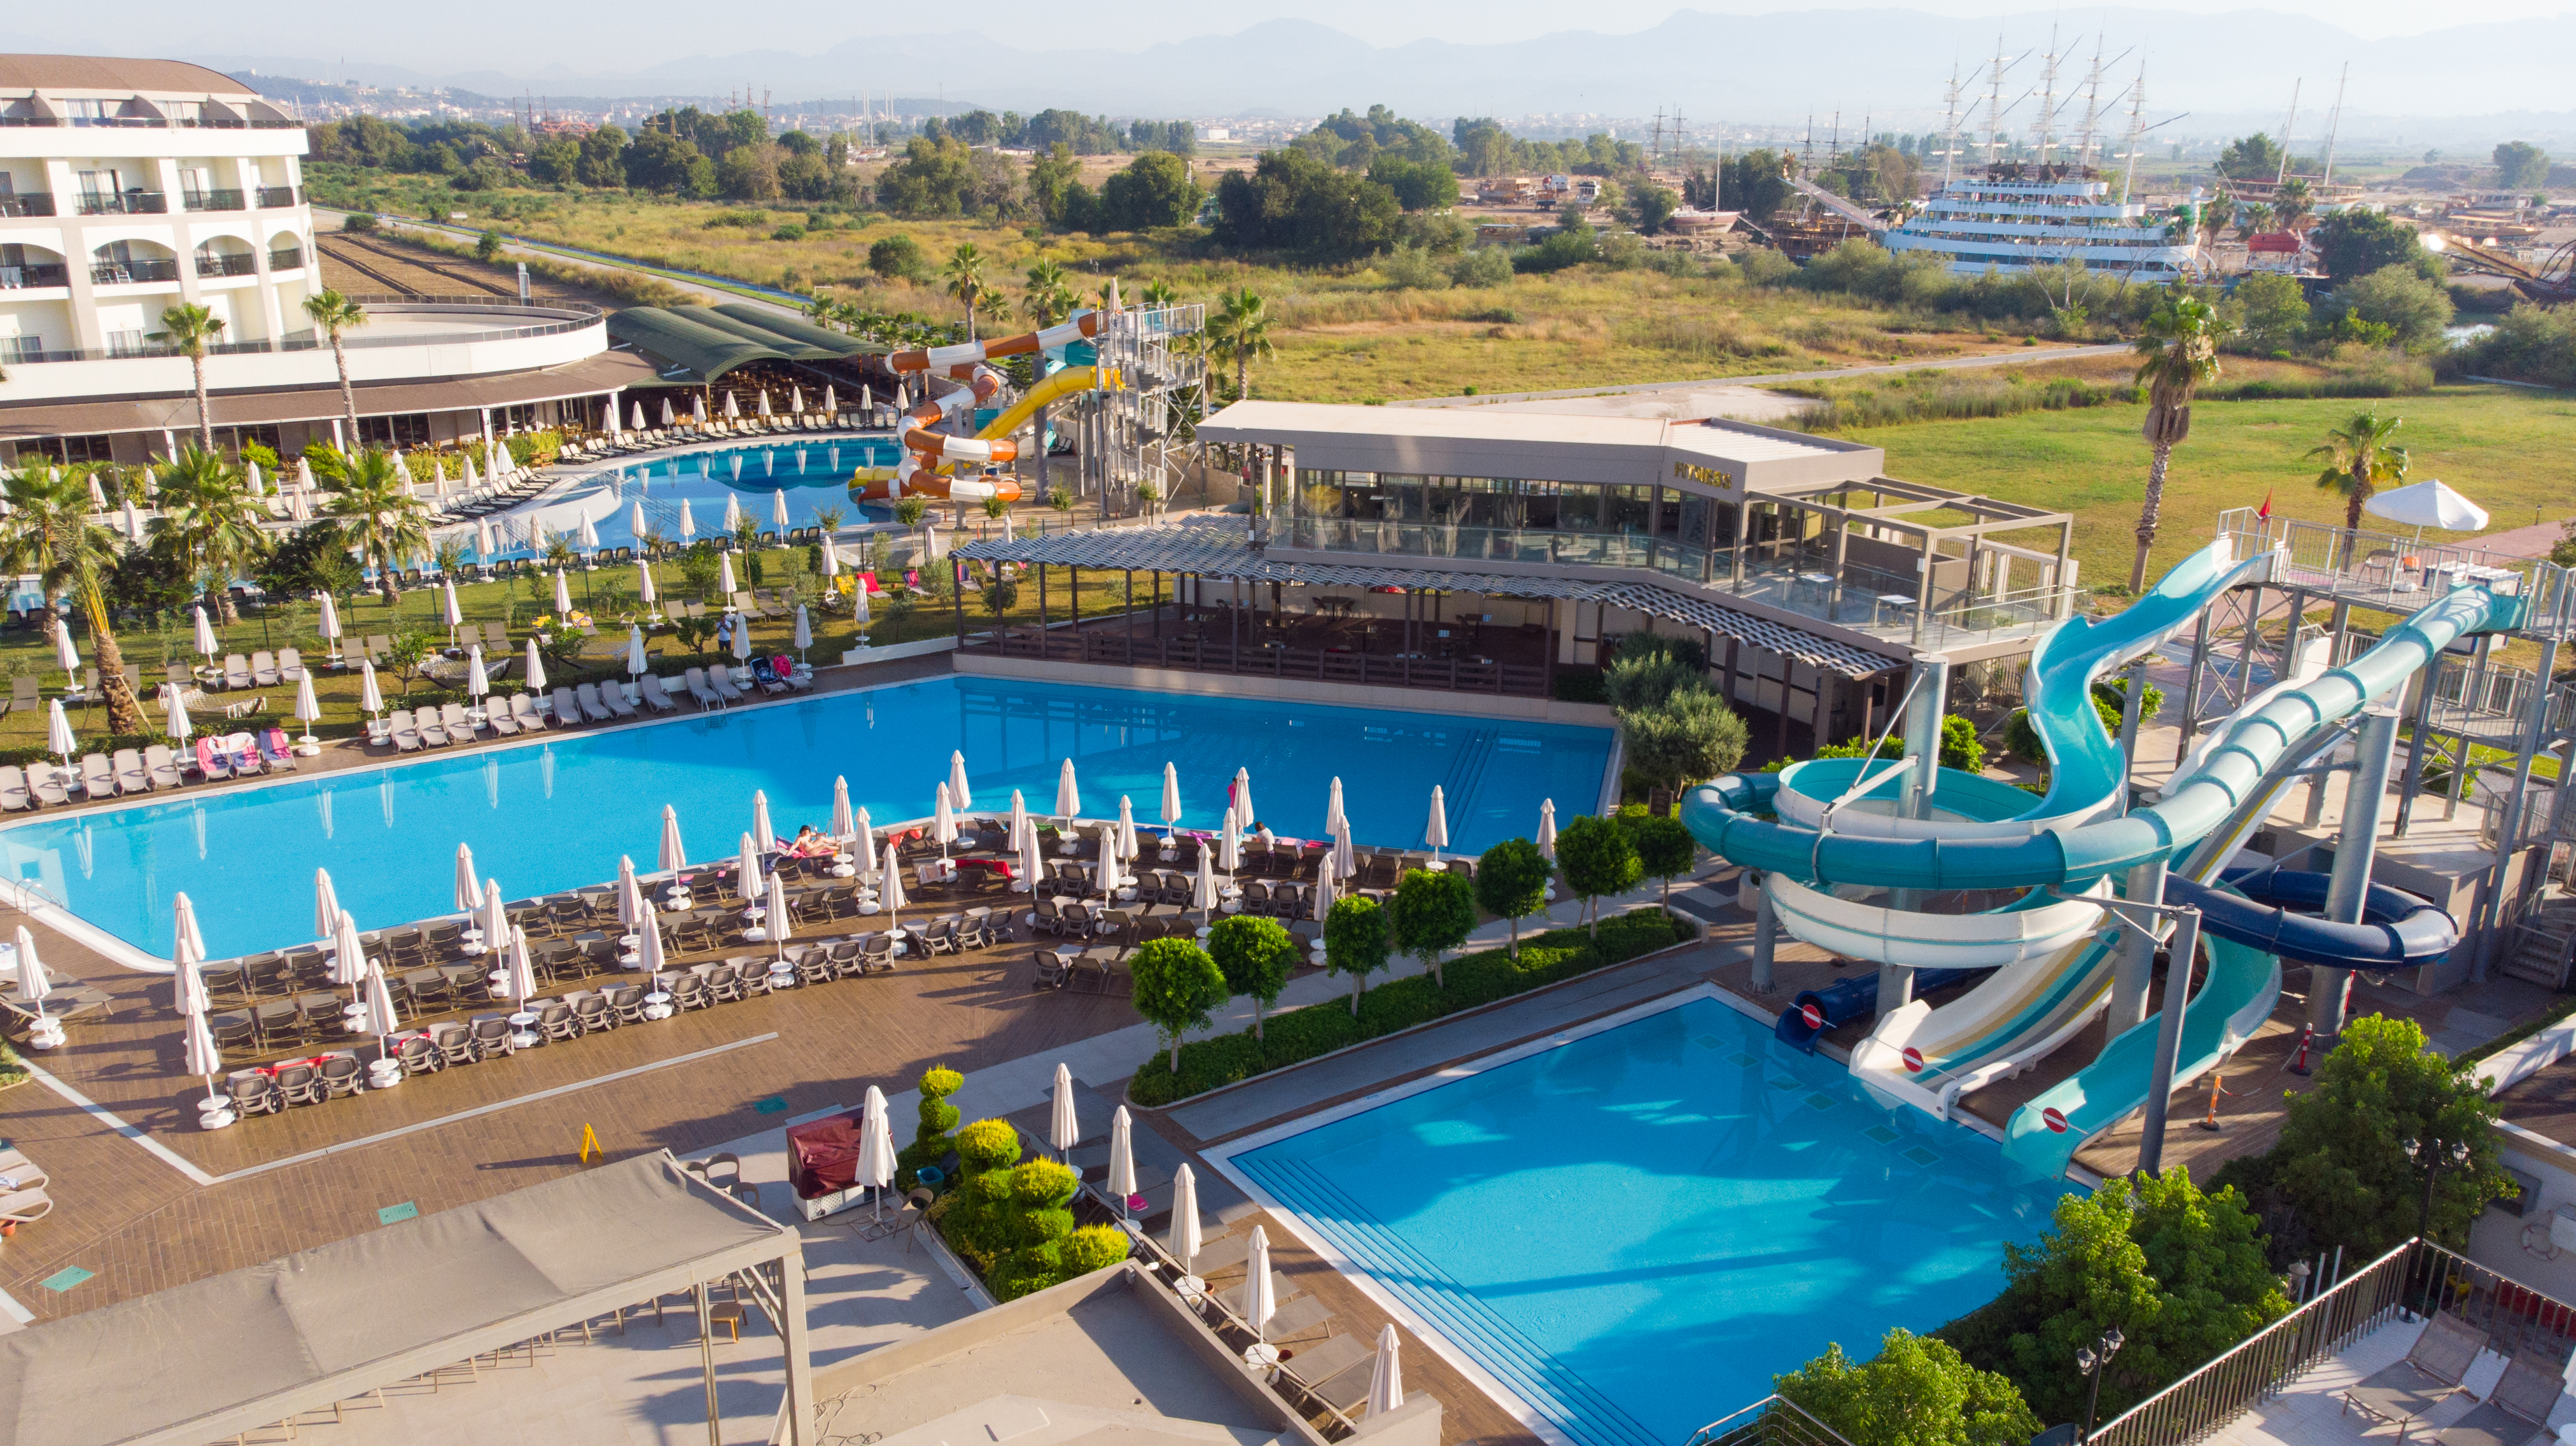 Riolavitas Spa and Resort